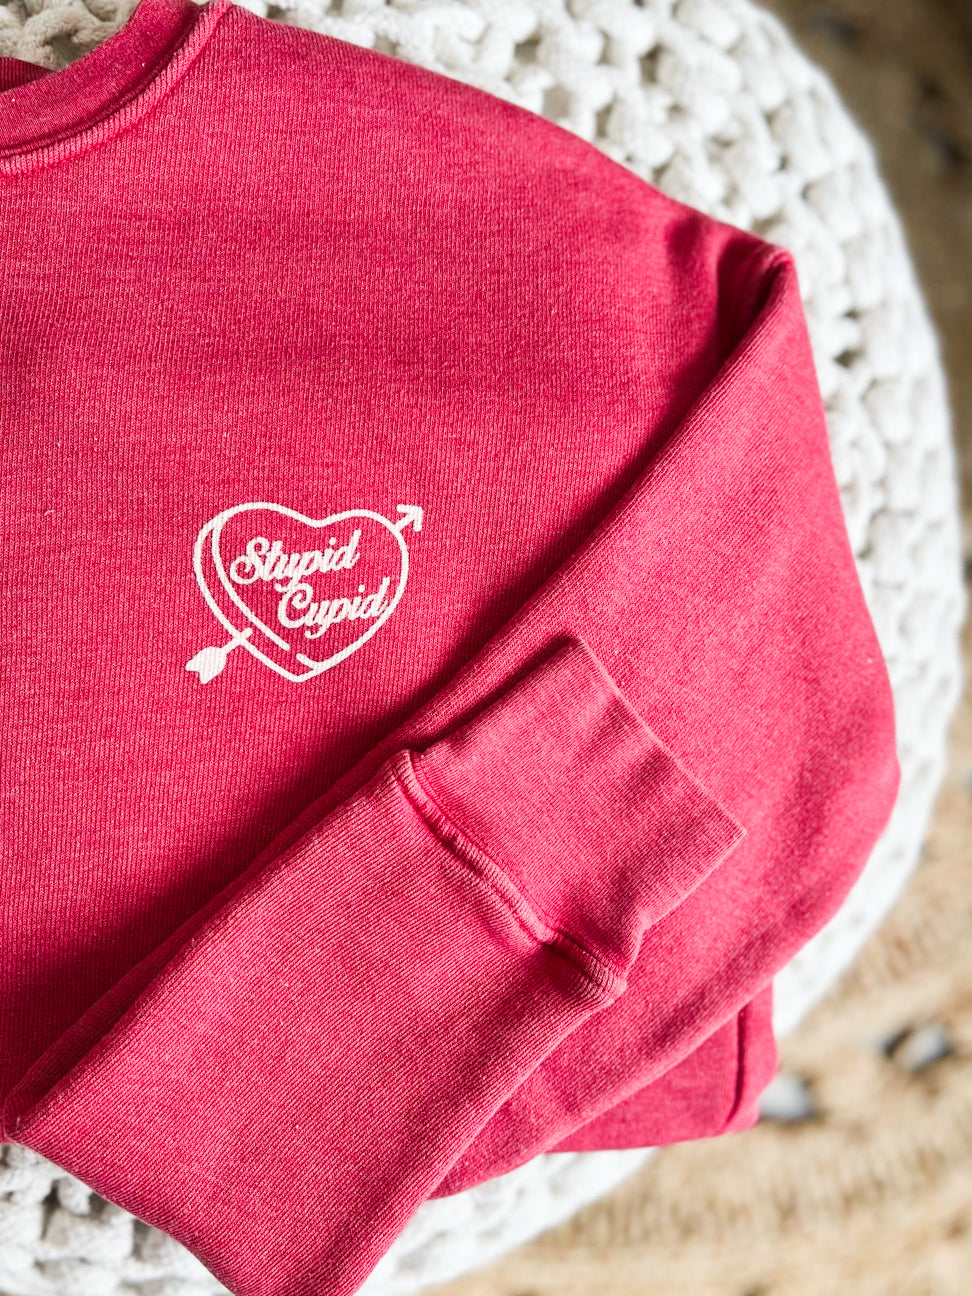 The Stupid Cupid Scarlette Red Graphic Sweatshirt